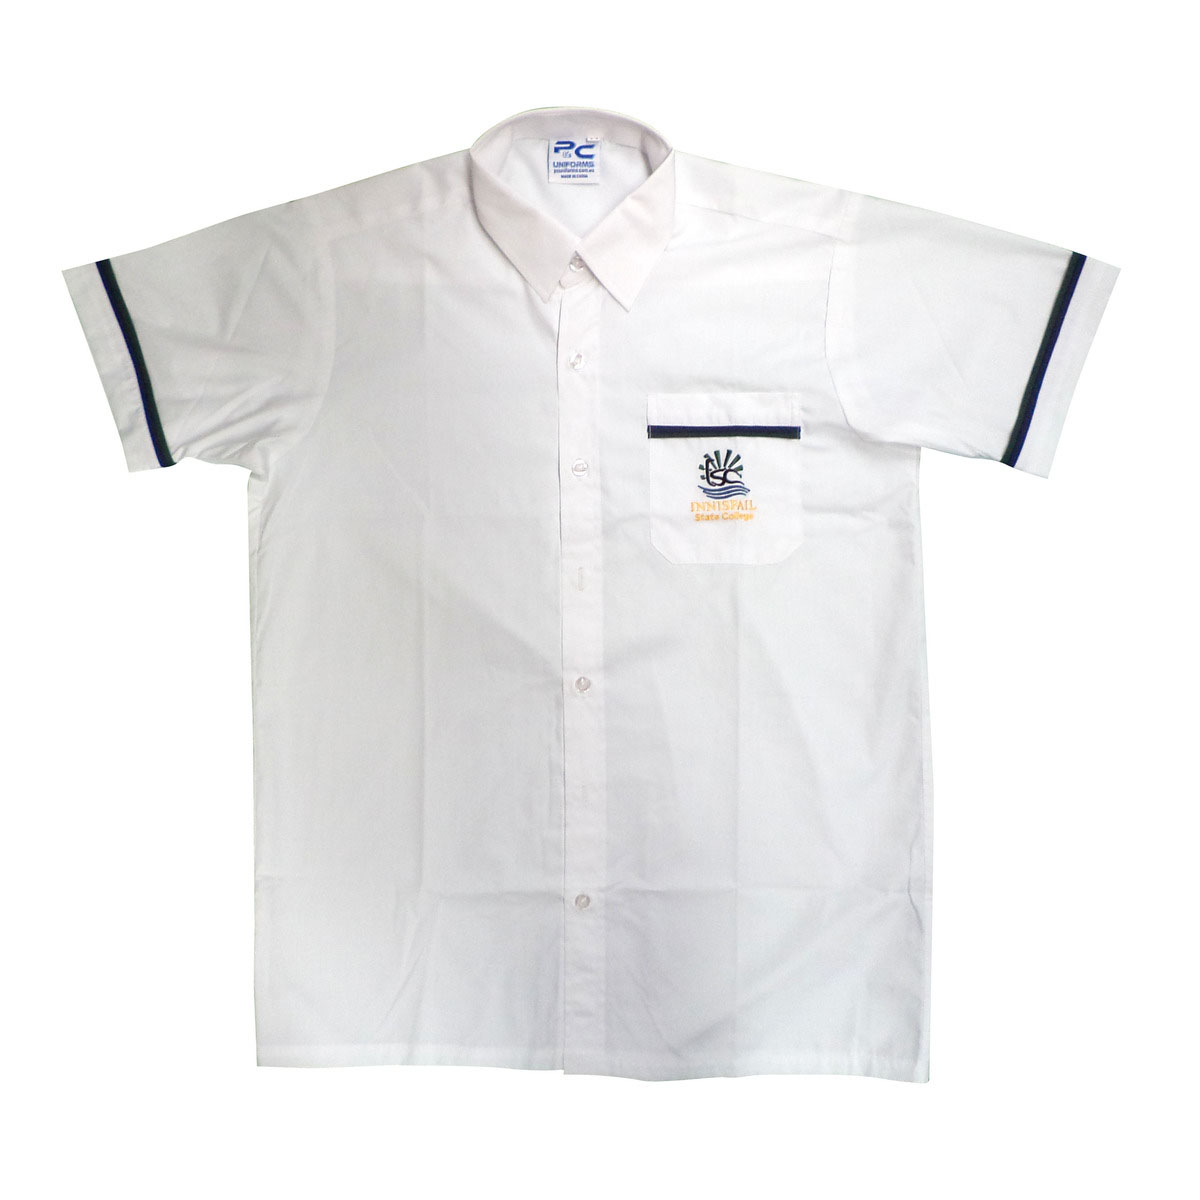 Boys Shirt Short Sleeve - Innisfail State College Uniform Shop